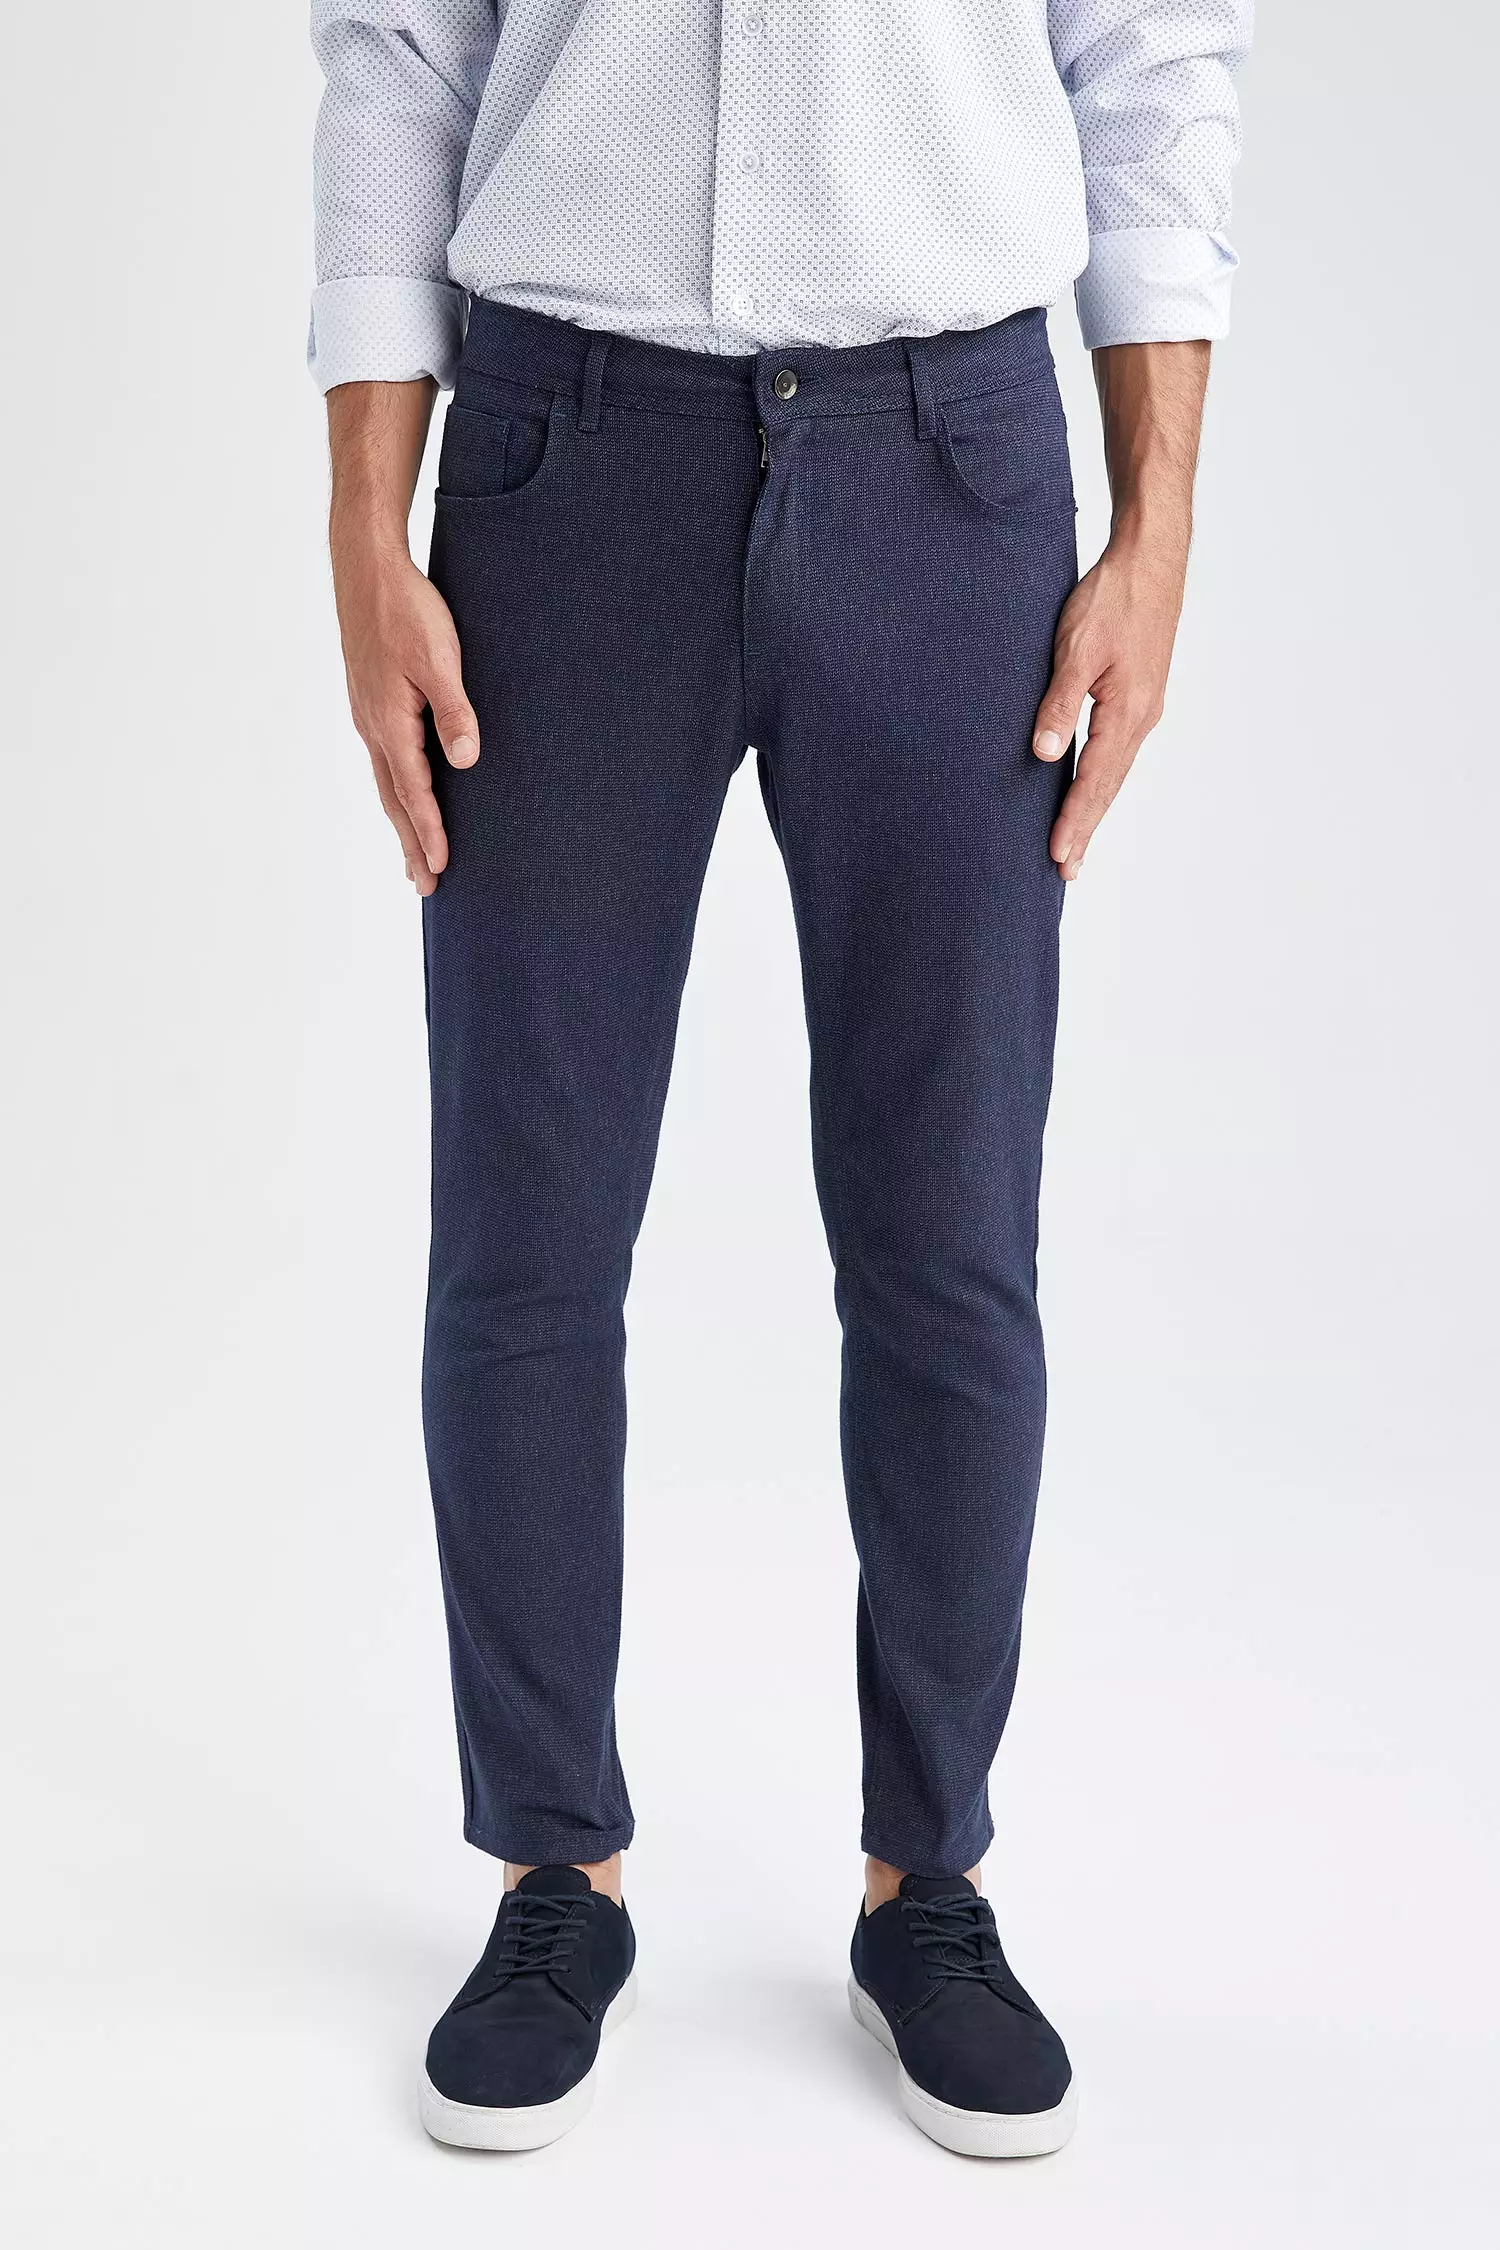 DeFacto Slim Fit Woven Trousers 2024, Buy DeFacto Online